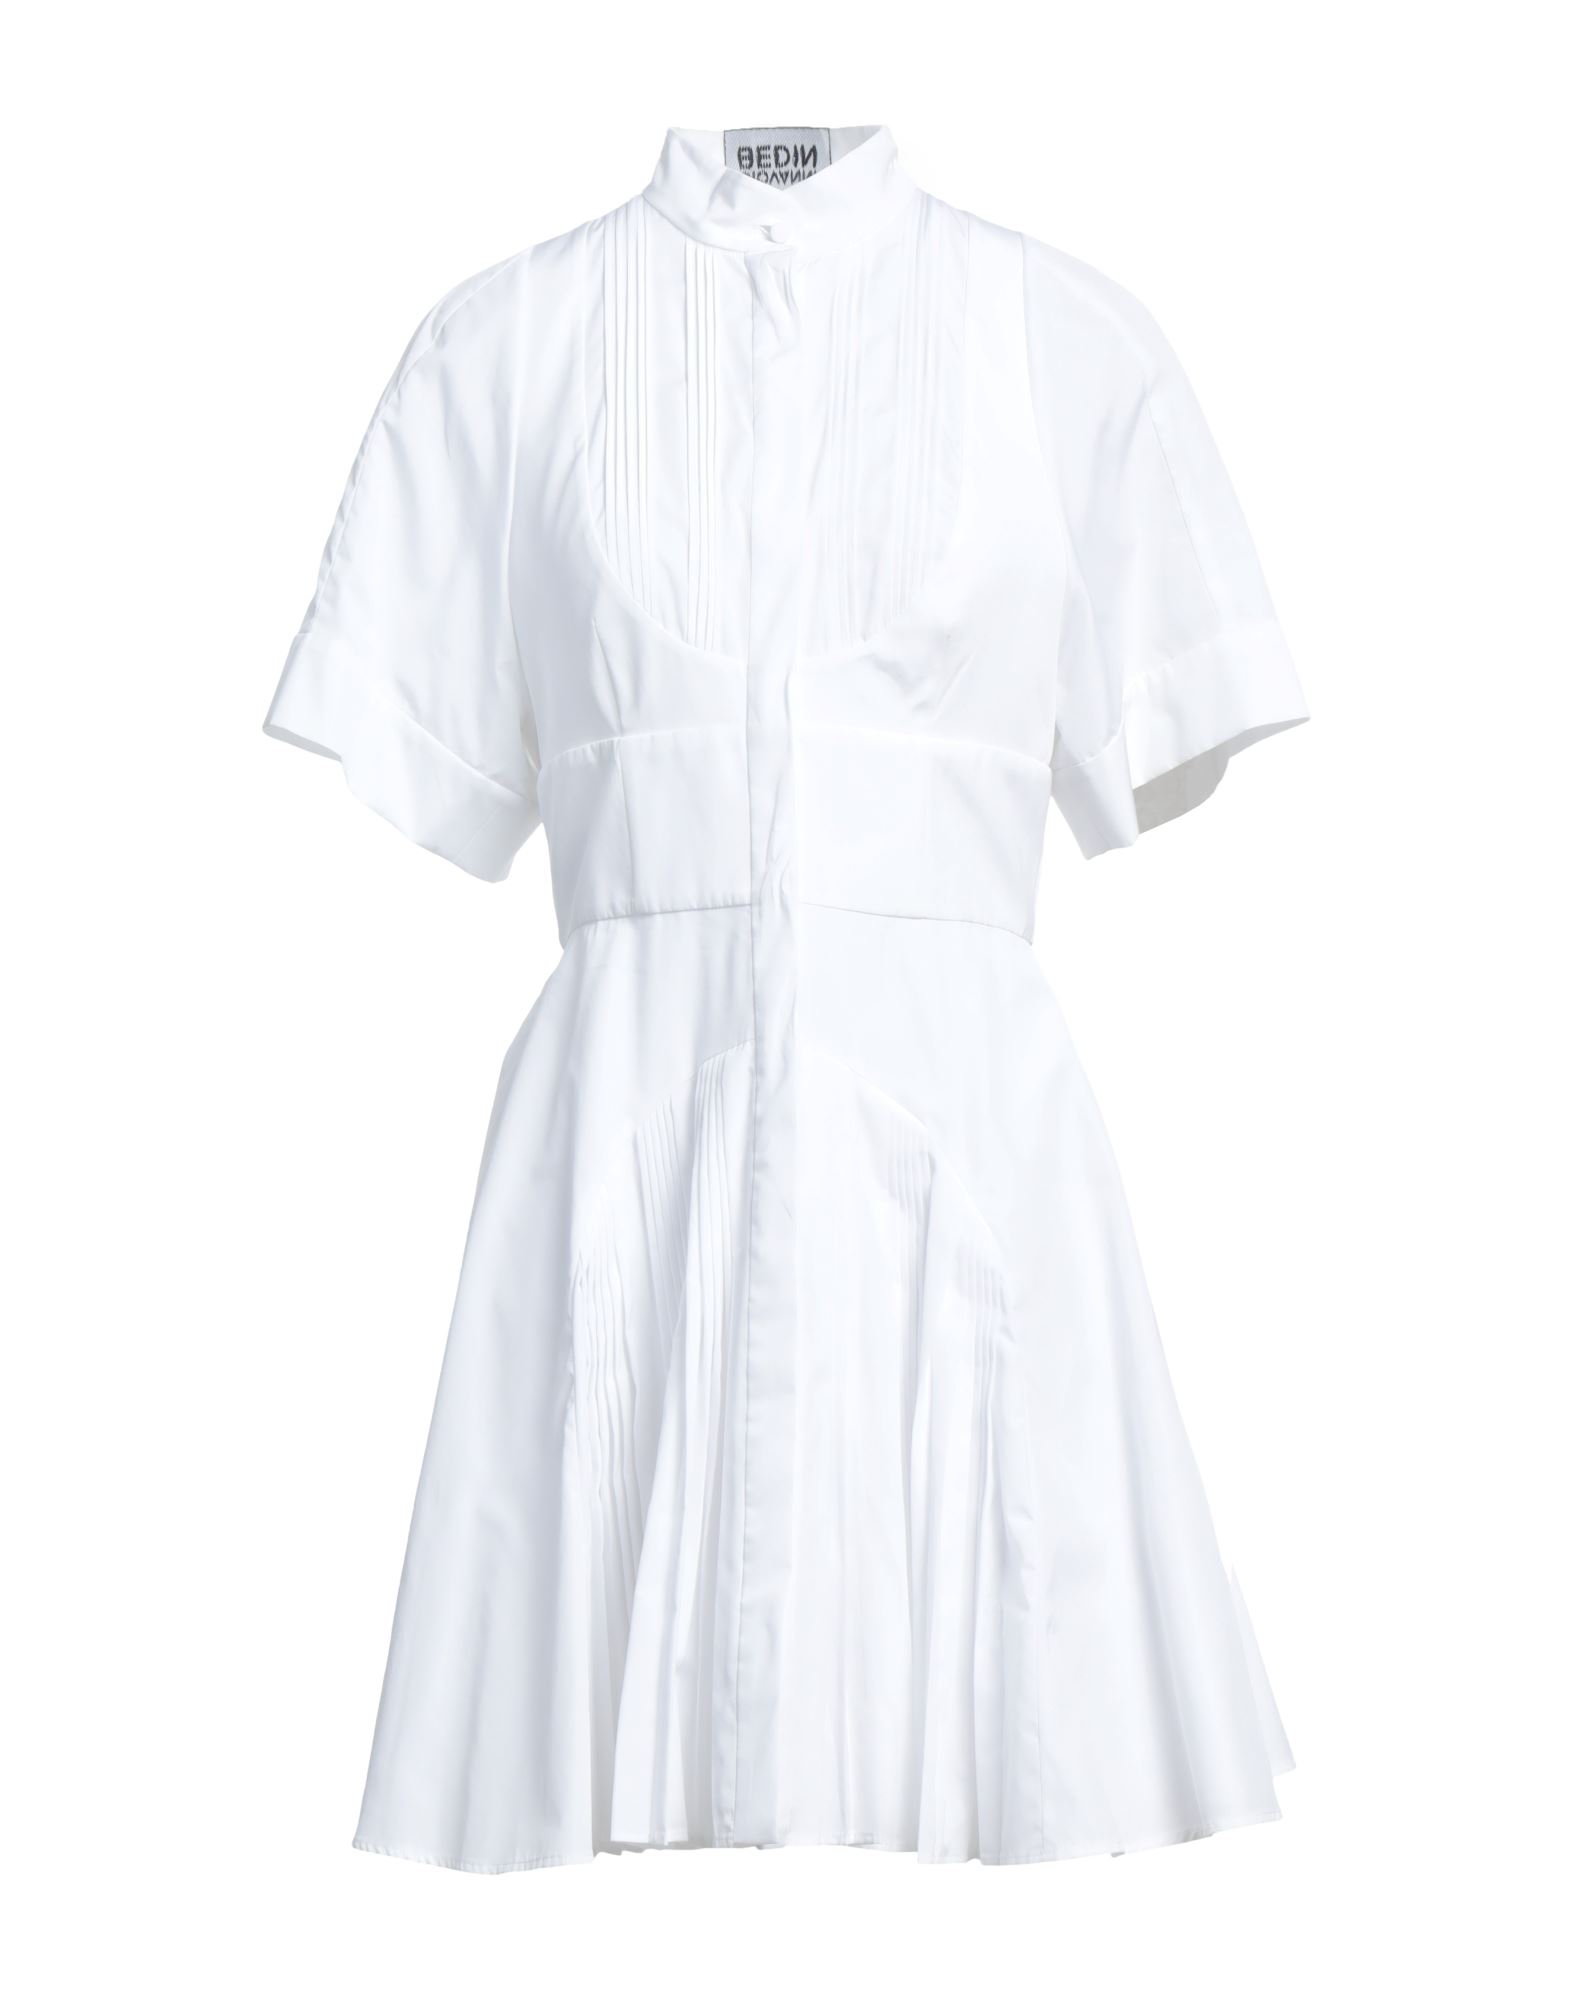 Giovanni Bedin Woman Mini Dress White Size 6 Cotton